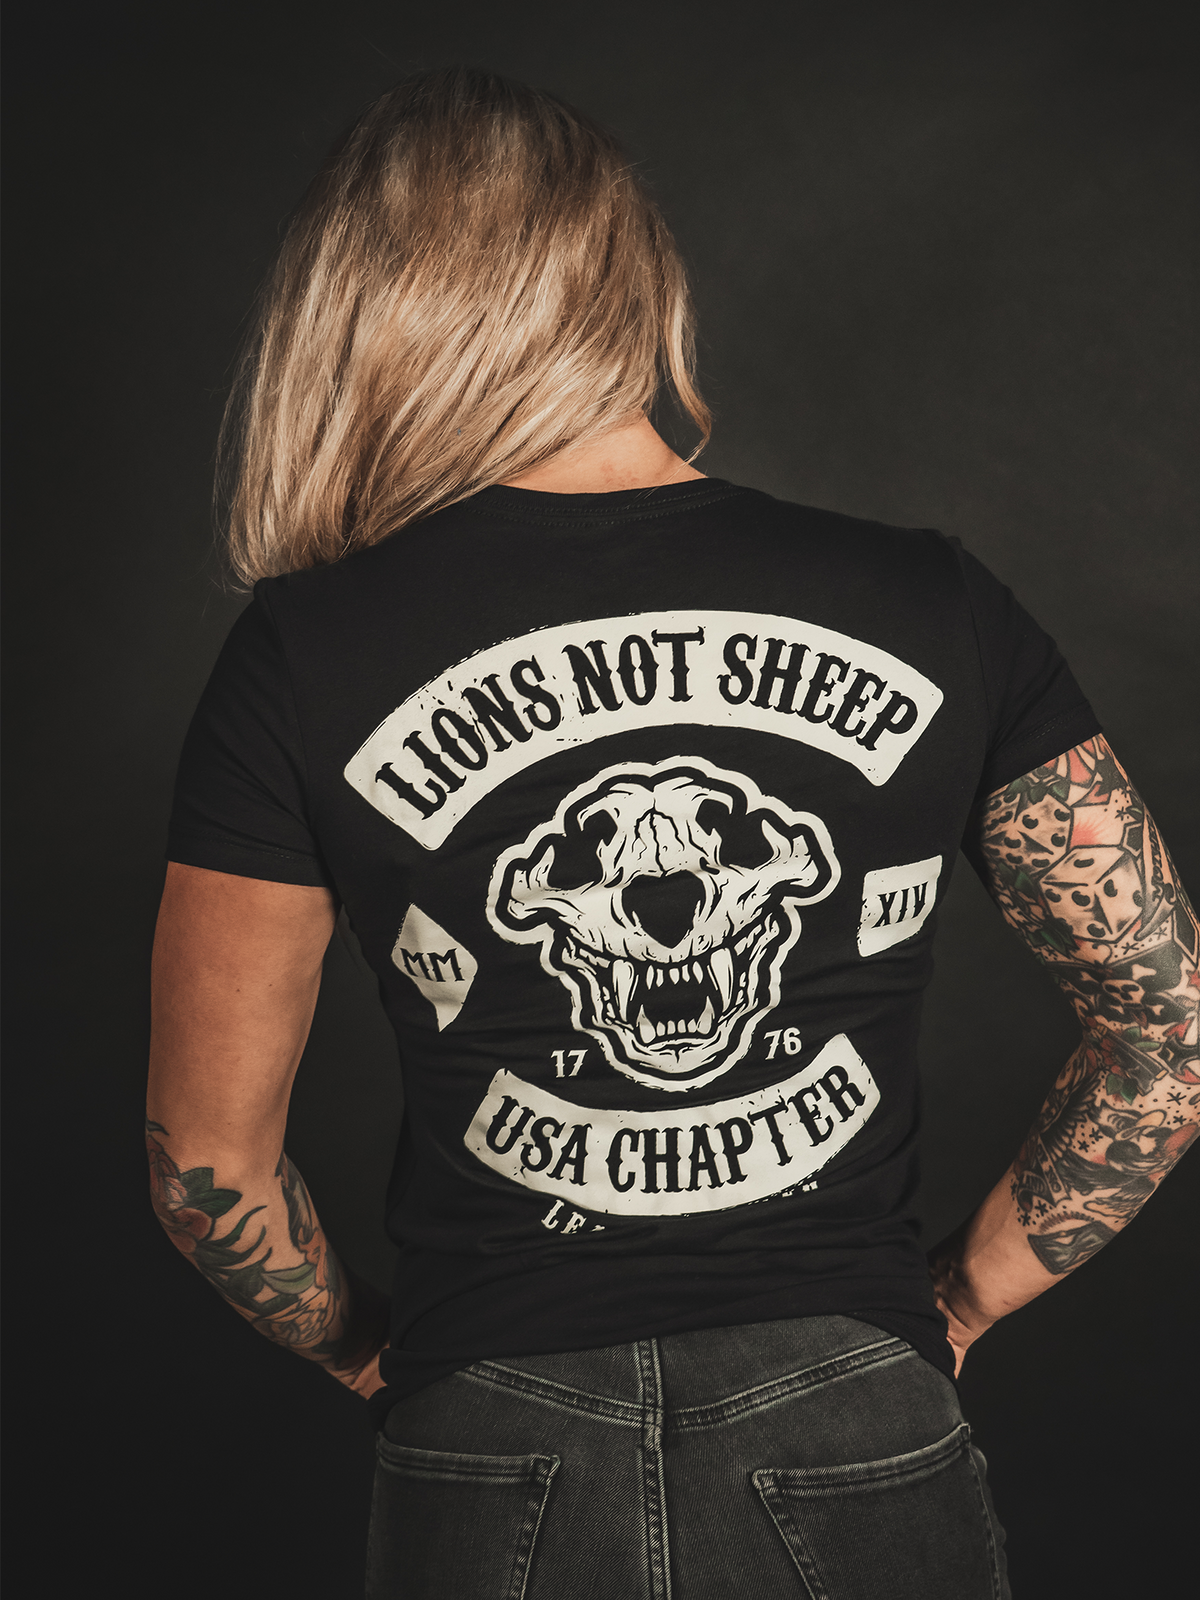 USA CHAPTER Womens Tee - Lions Not Sheep ®